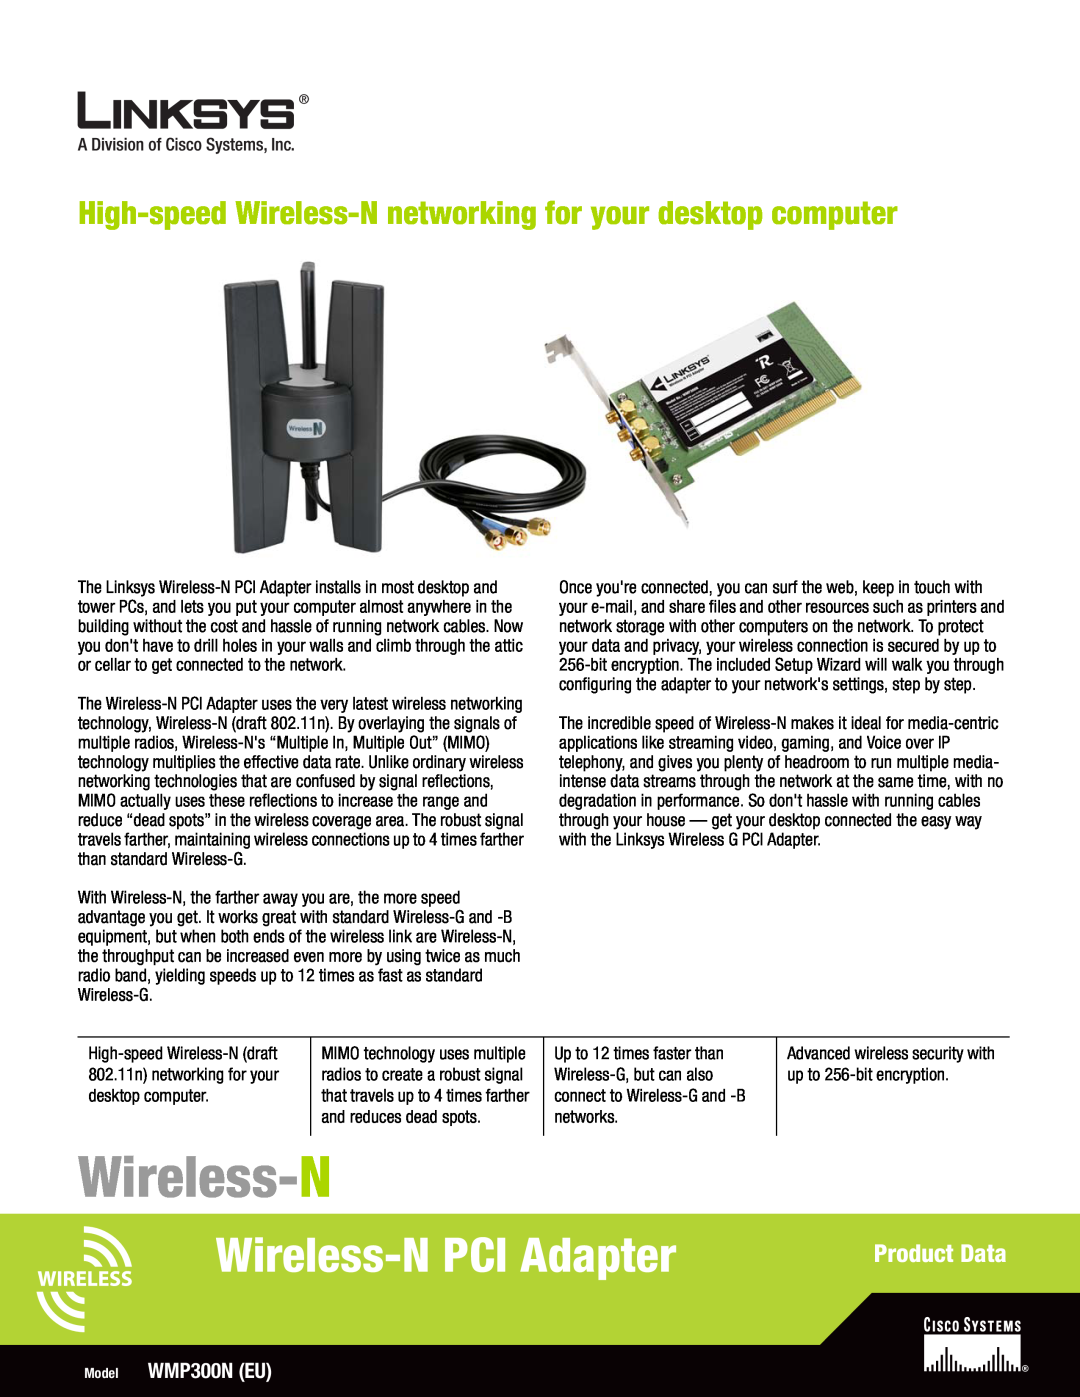 Linksys manual Model WMP300N EU, Wireless-N PCI Adapter, High-speed Wireless-N networking for your desktop computer 